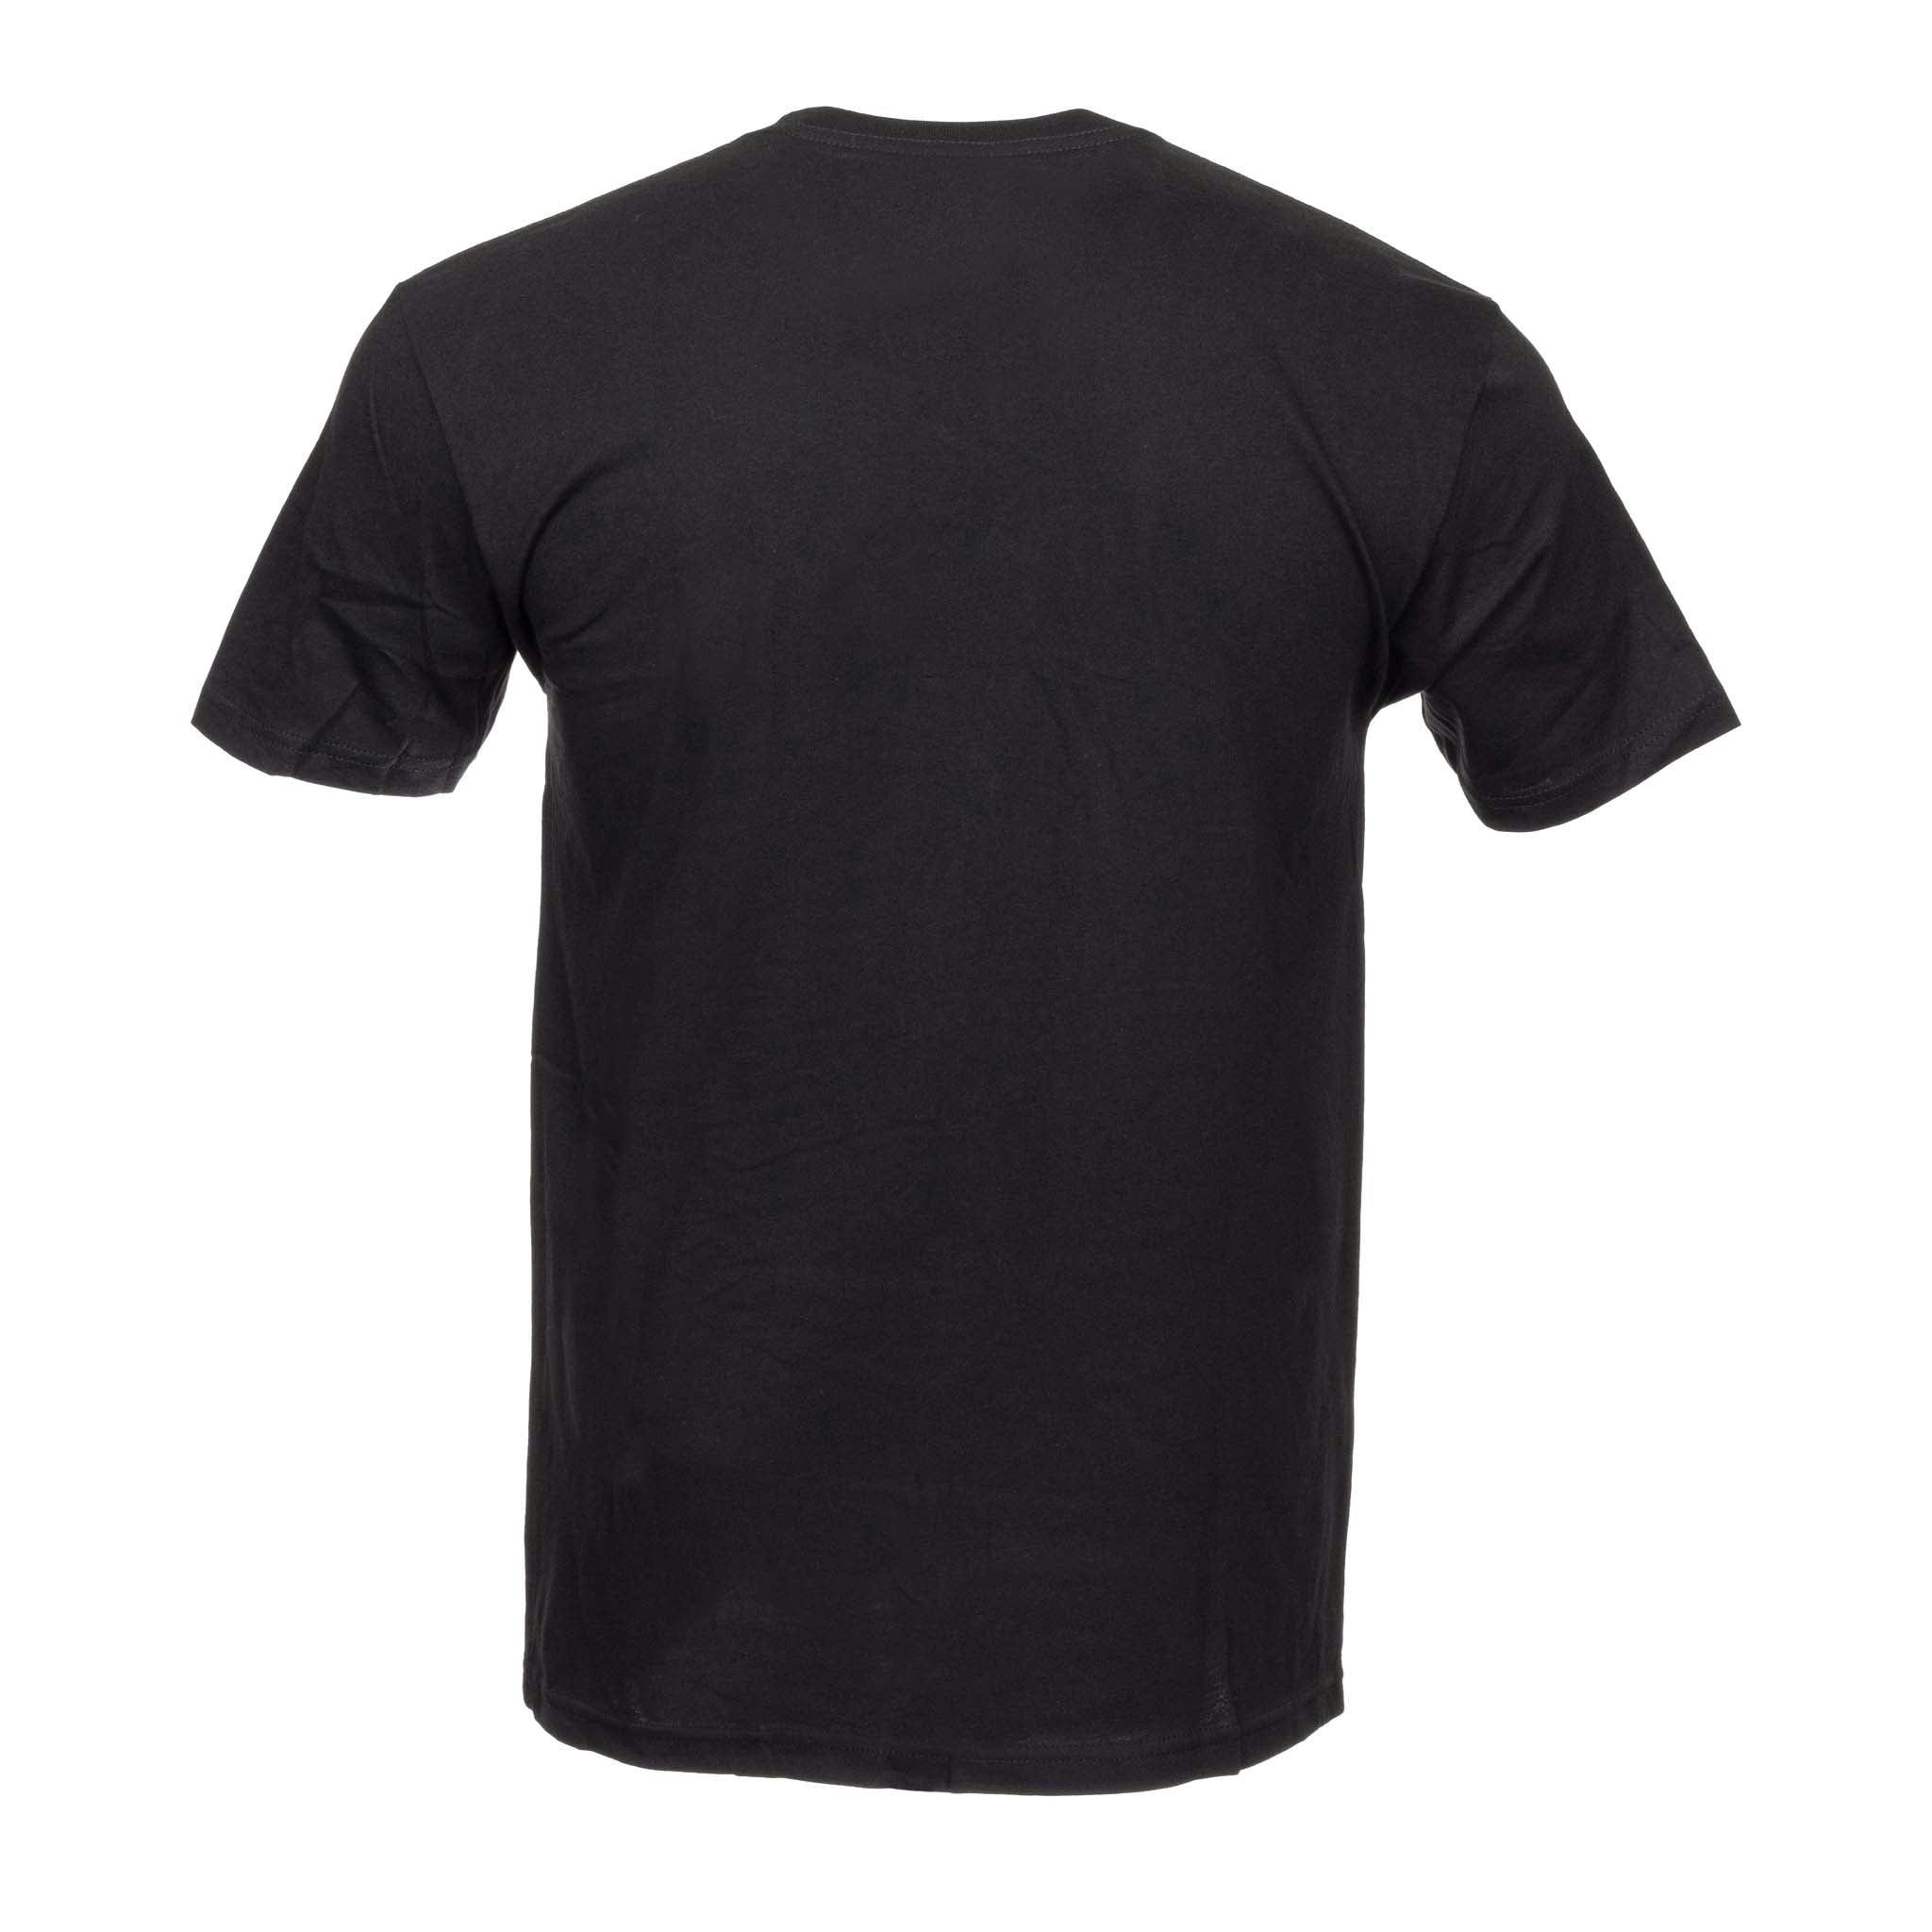 Sierra Nevada Pale-Porter-Stout T-Shirt Black - Back view